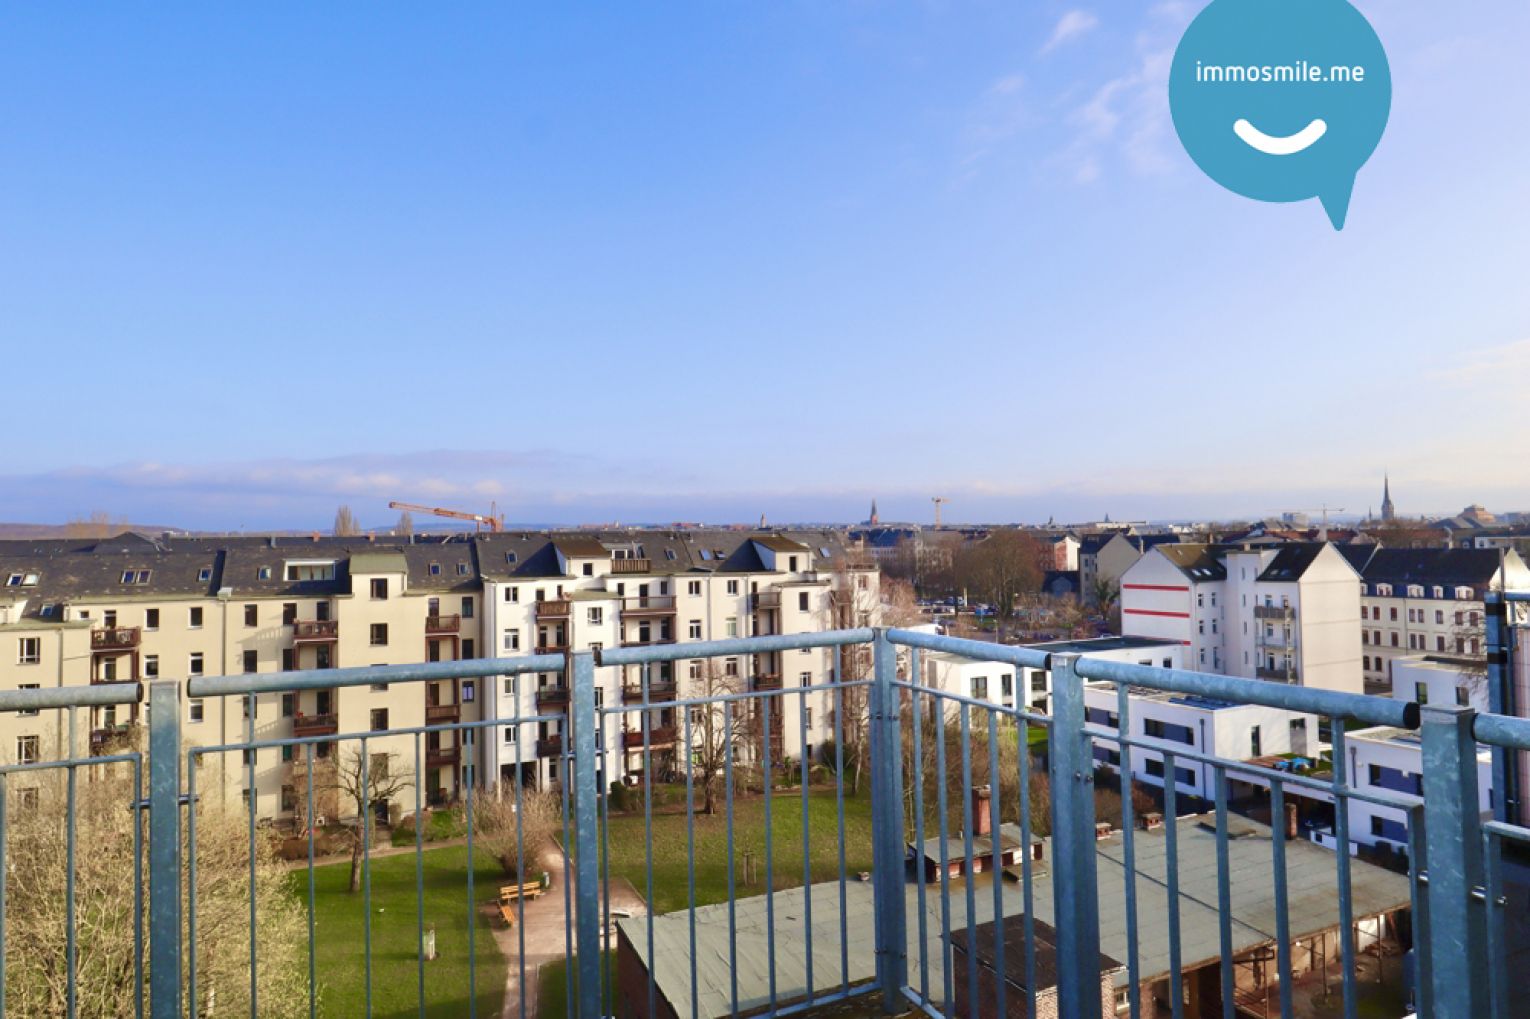 Maisonettewohnung • Dachgeschoss • 3 Zimmer • Tageslichtbad • Terrasse • Balkon • Schloßchemnitz